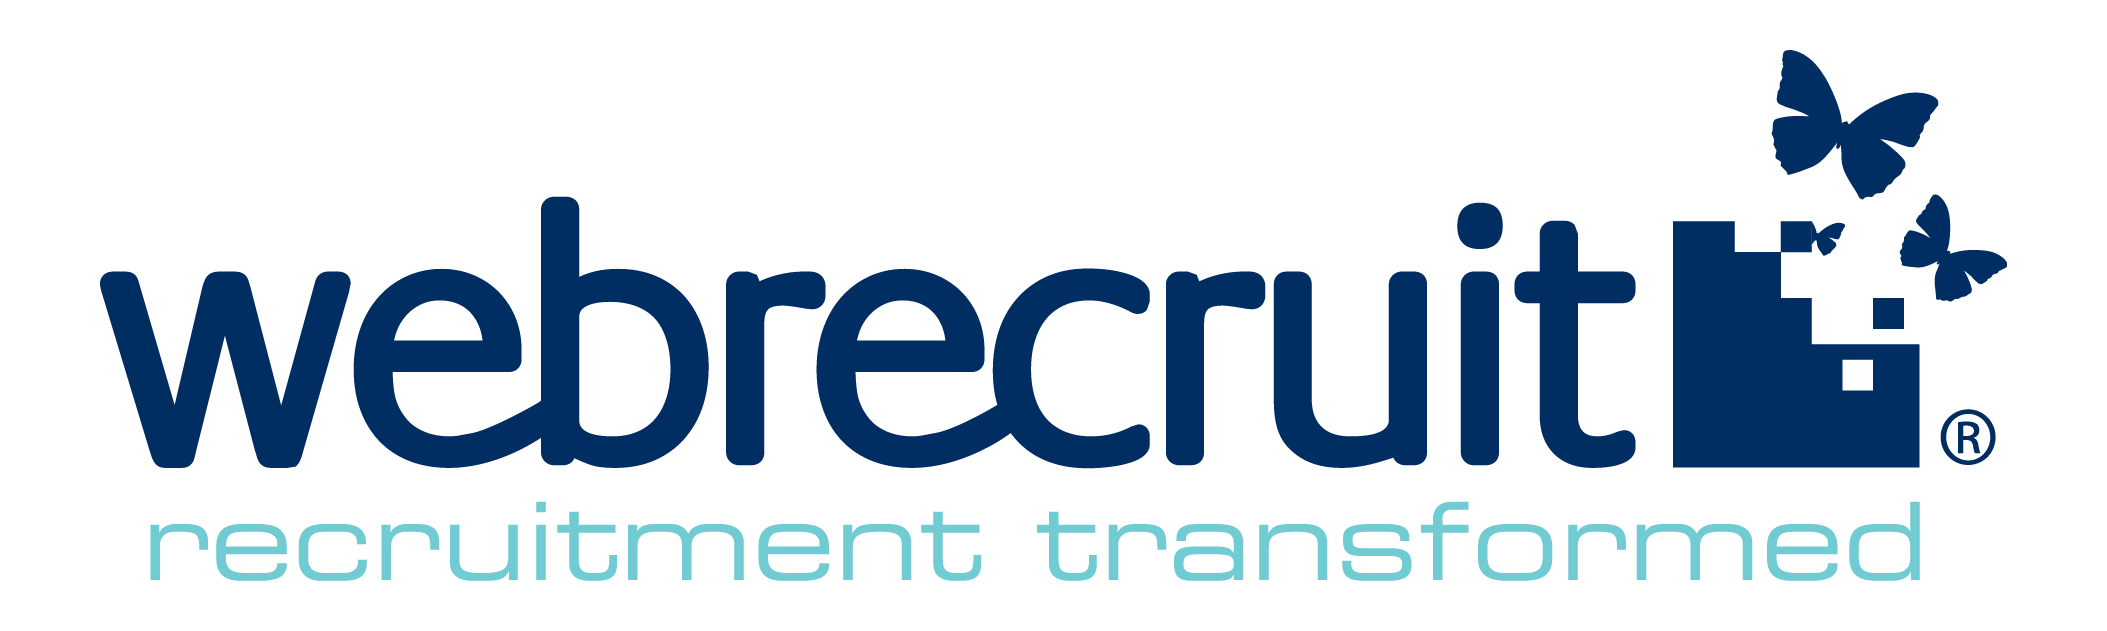 webrecruit-logo